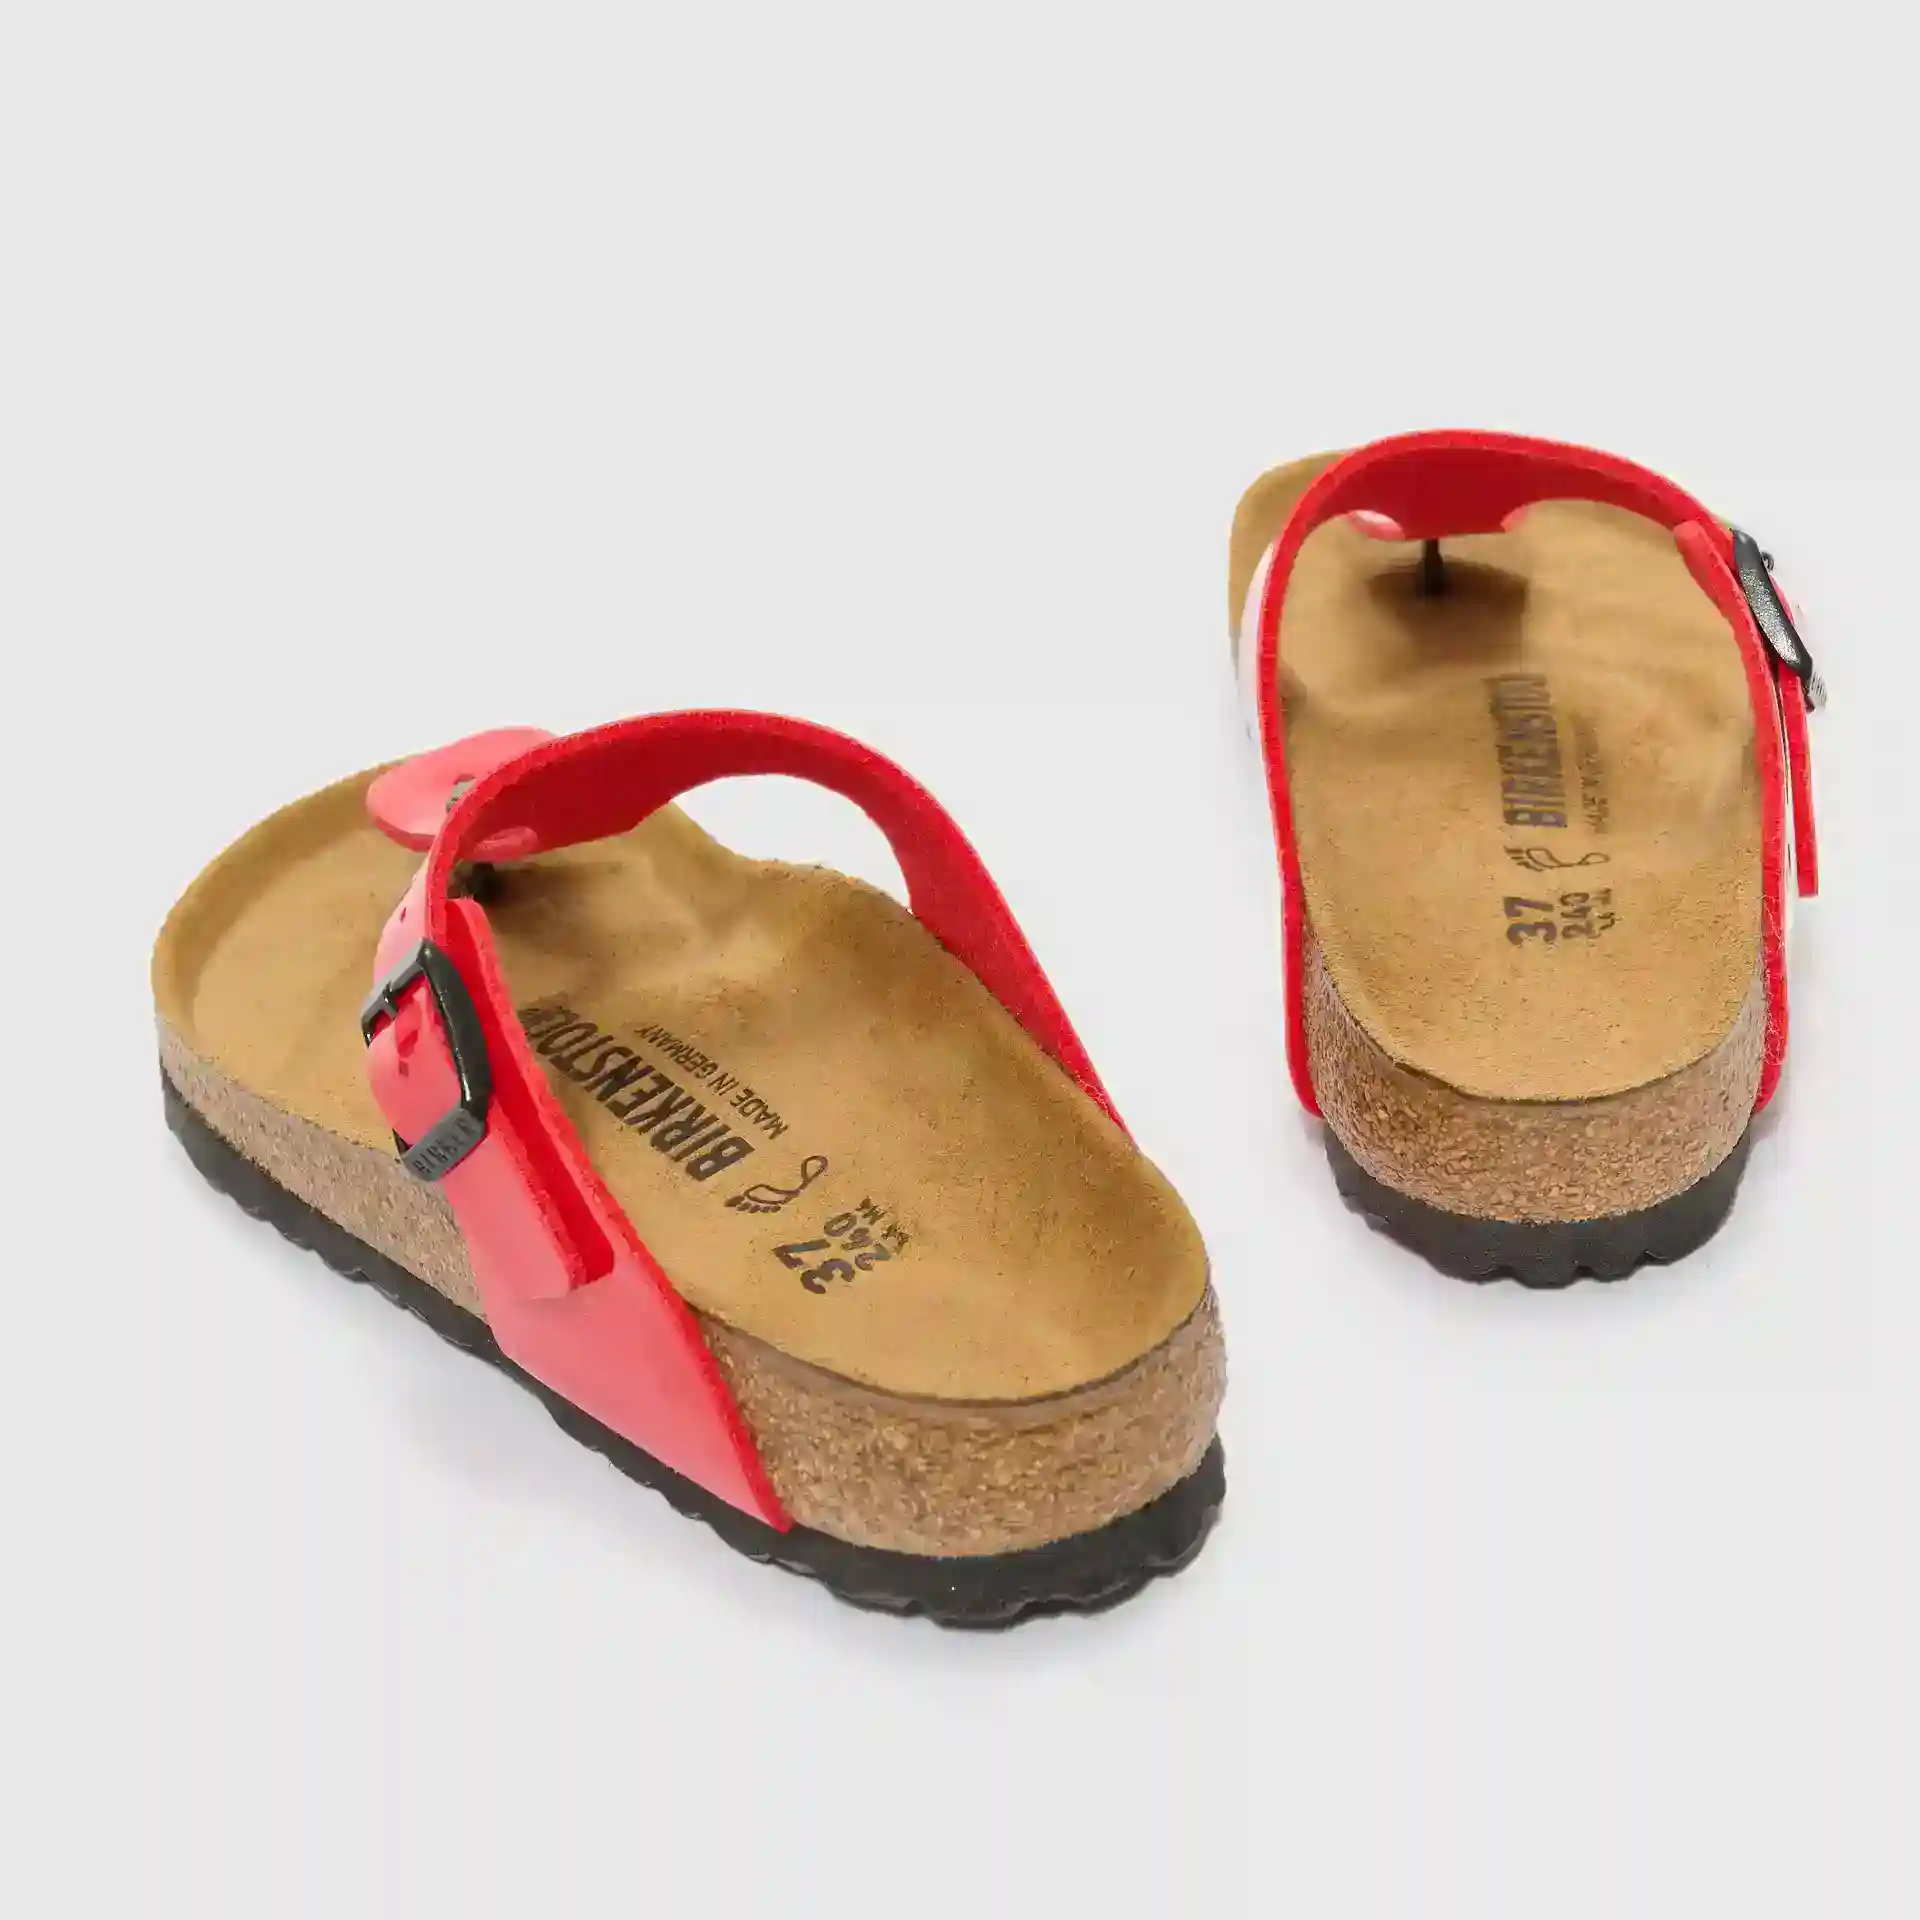 Birkenstock Gizeh BS Sandals Patent Cherry